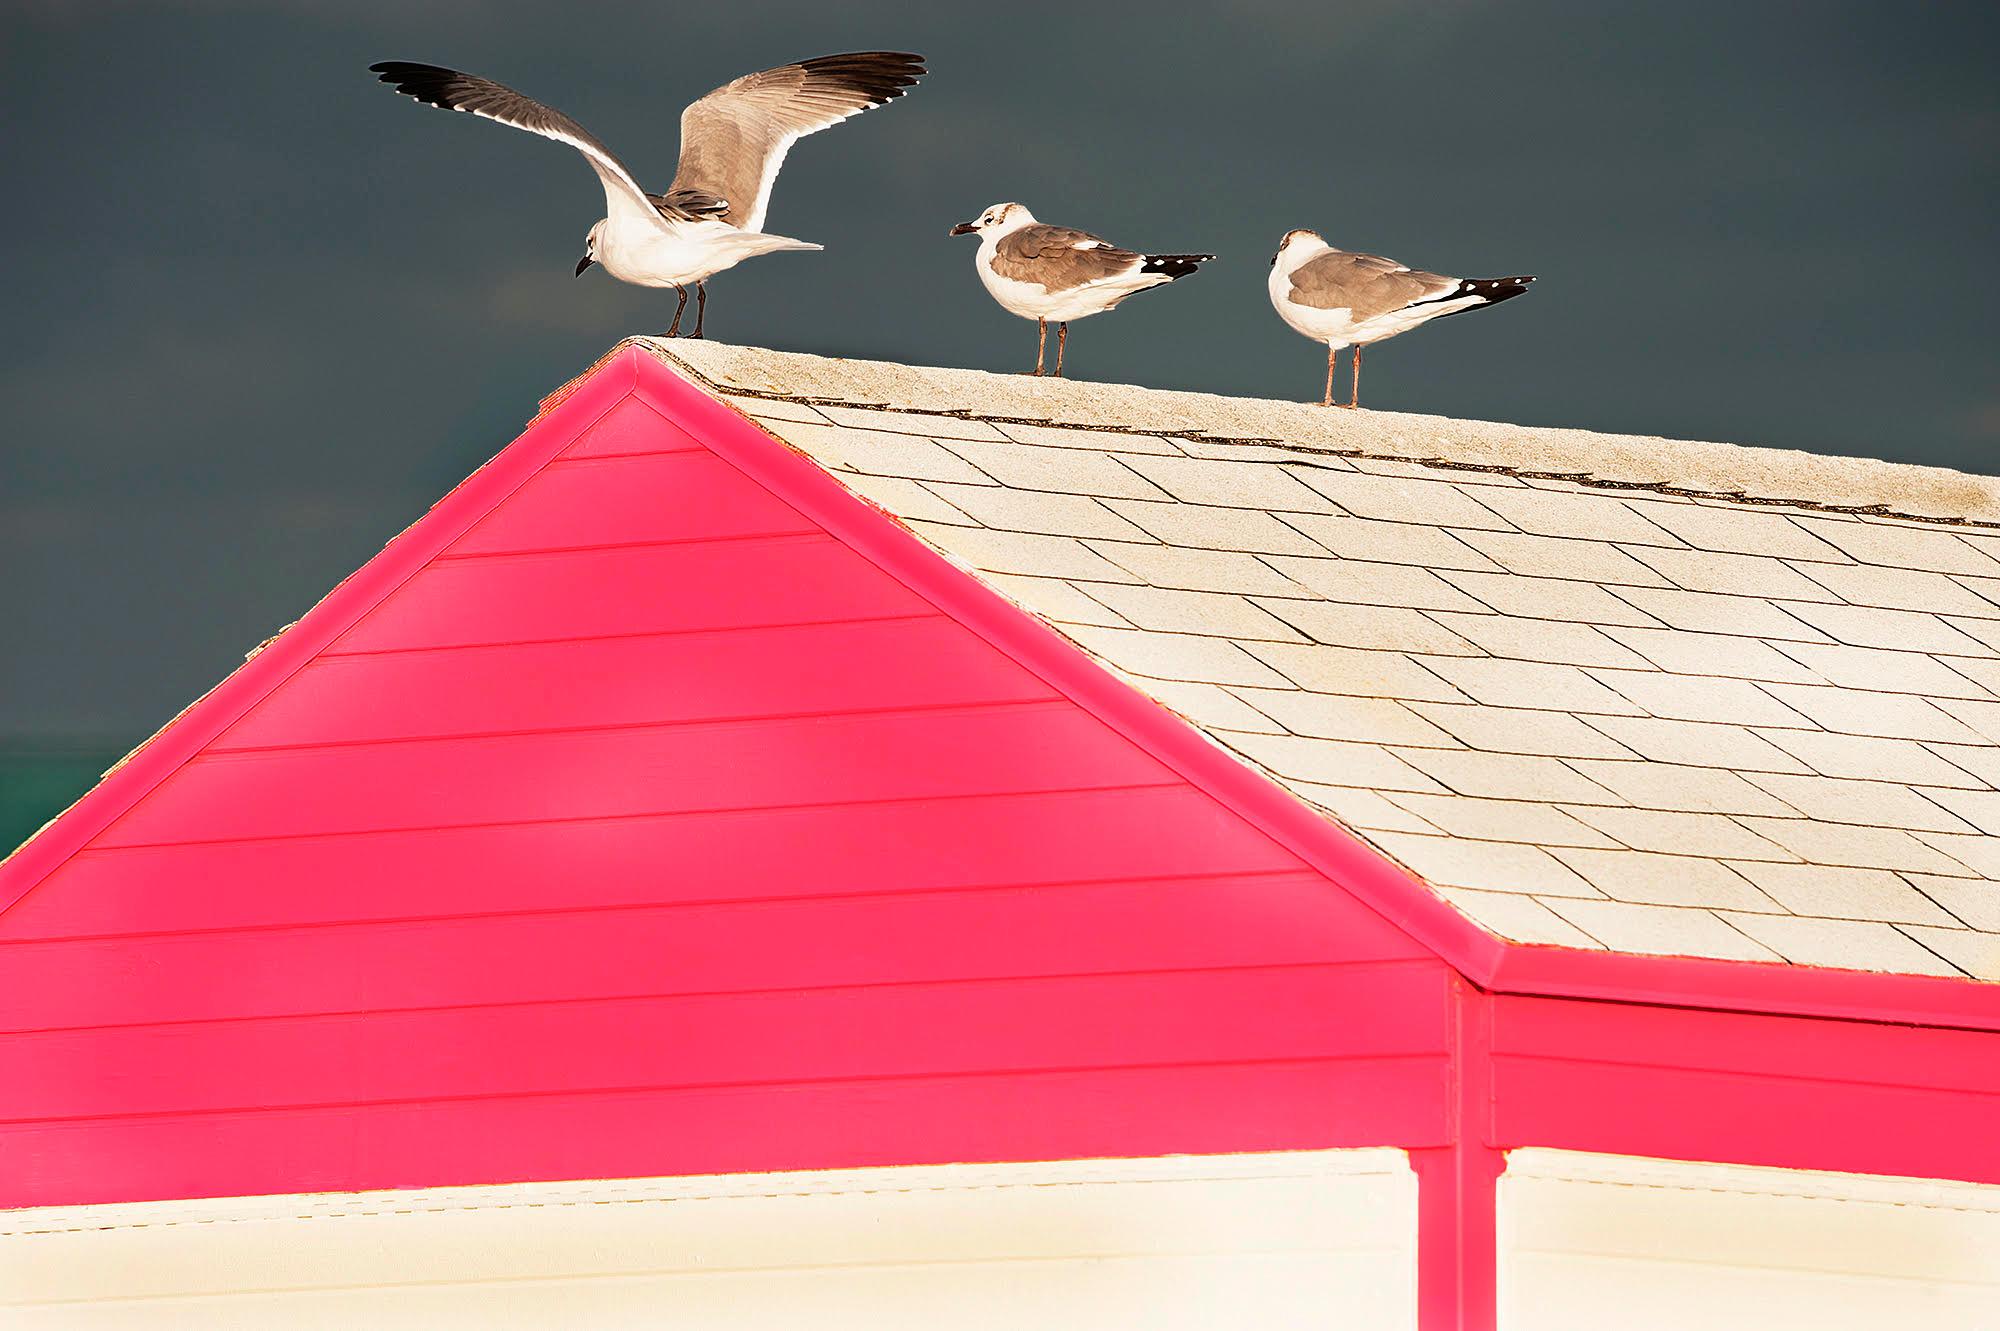 Mitchell Funk Abstract Photograph - Joyful Birds on Roof of a Pink, Summer Beach House East Hampton, Abstract Photo